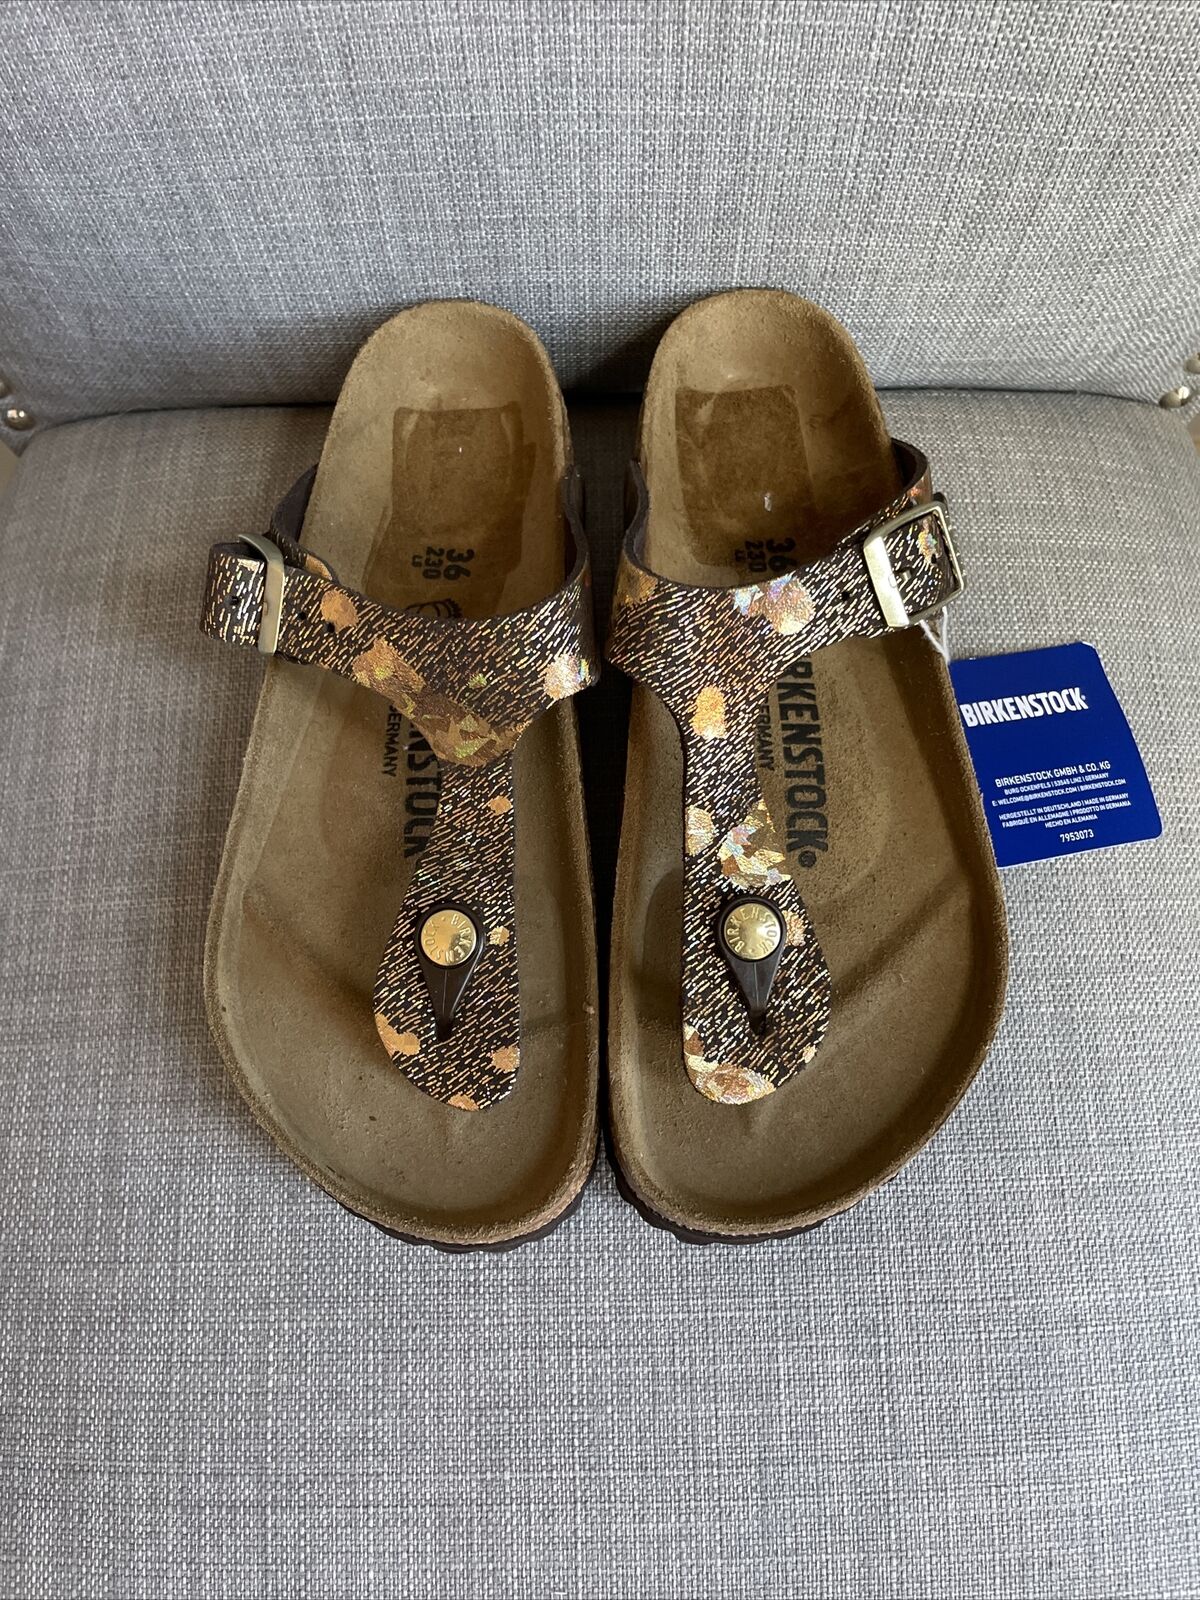 Hassy account Onderbreking Birkenstock Gizeh Women's Leather Metallic Thong Sandal in Brown Sz 5/5.5  EU 36 4040714067117 | eBay